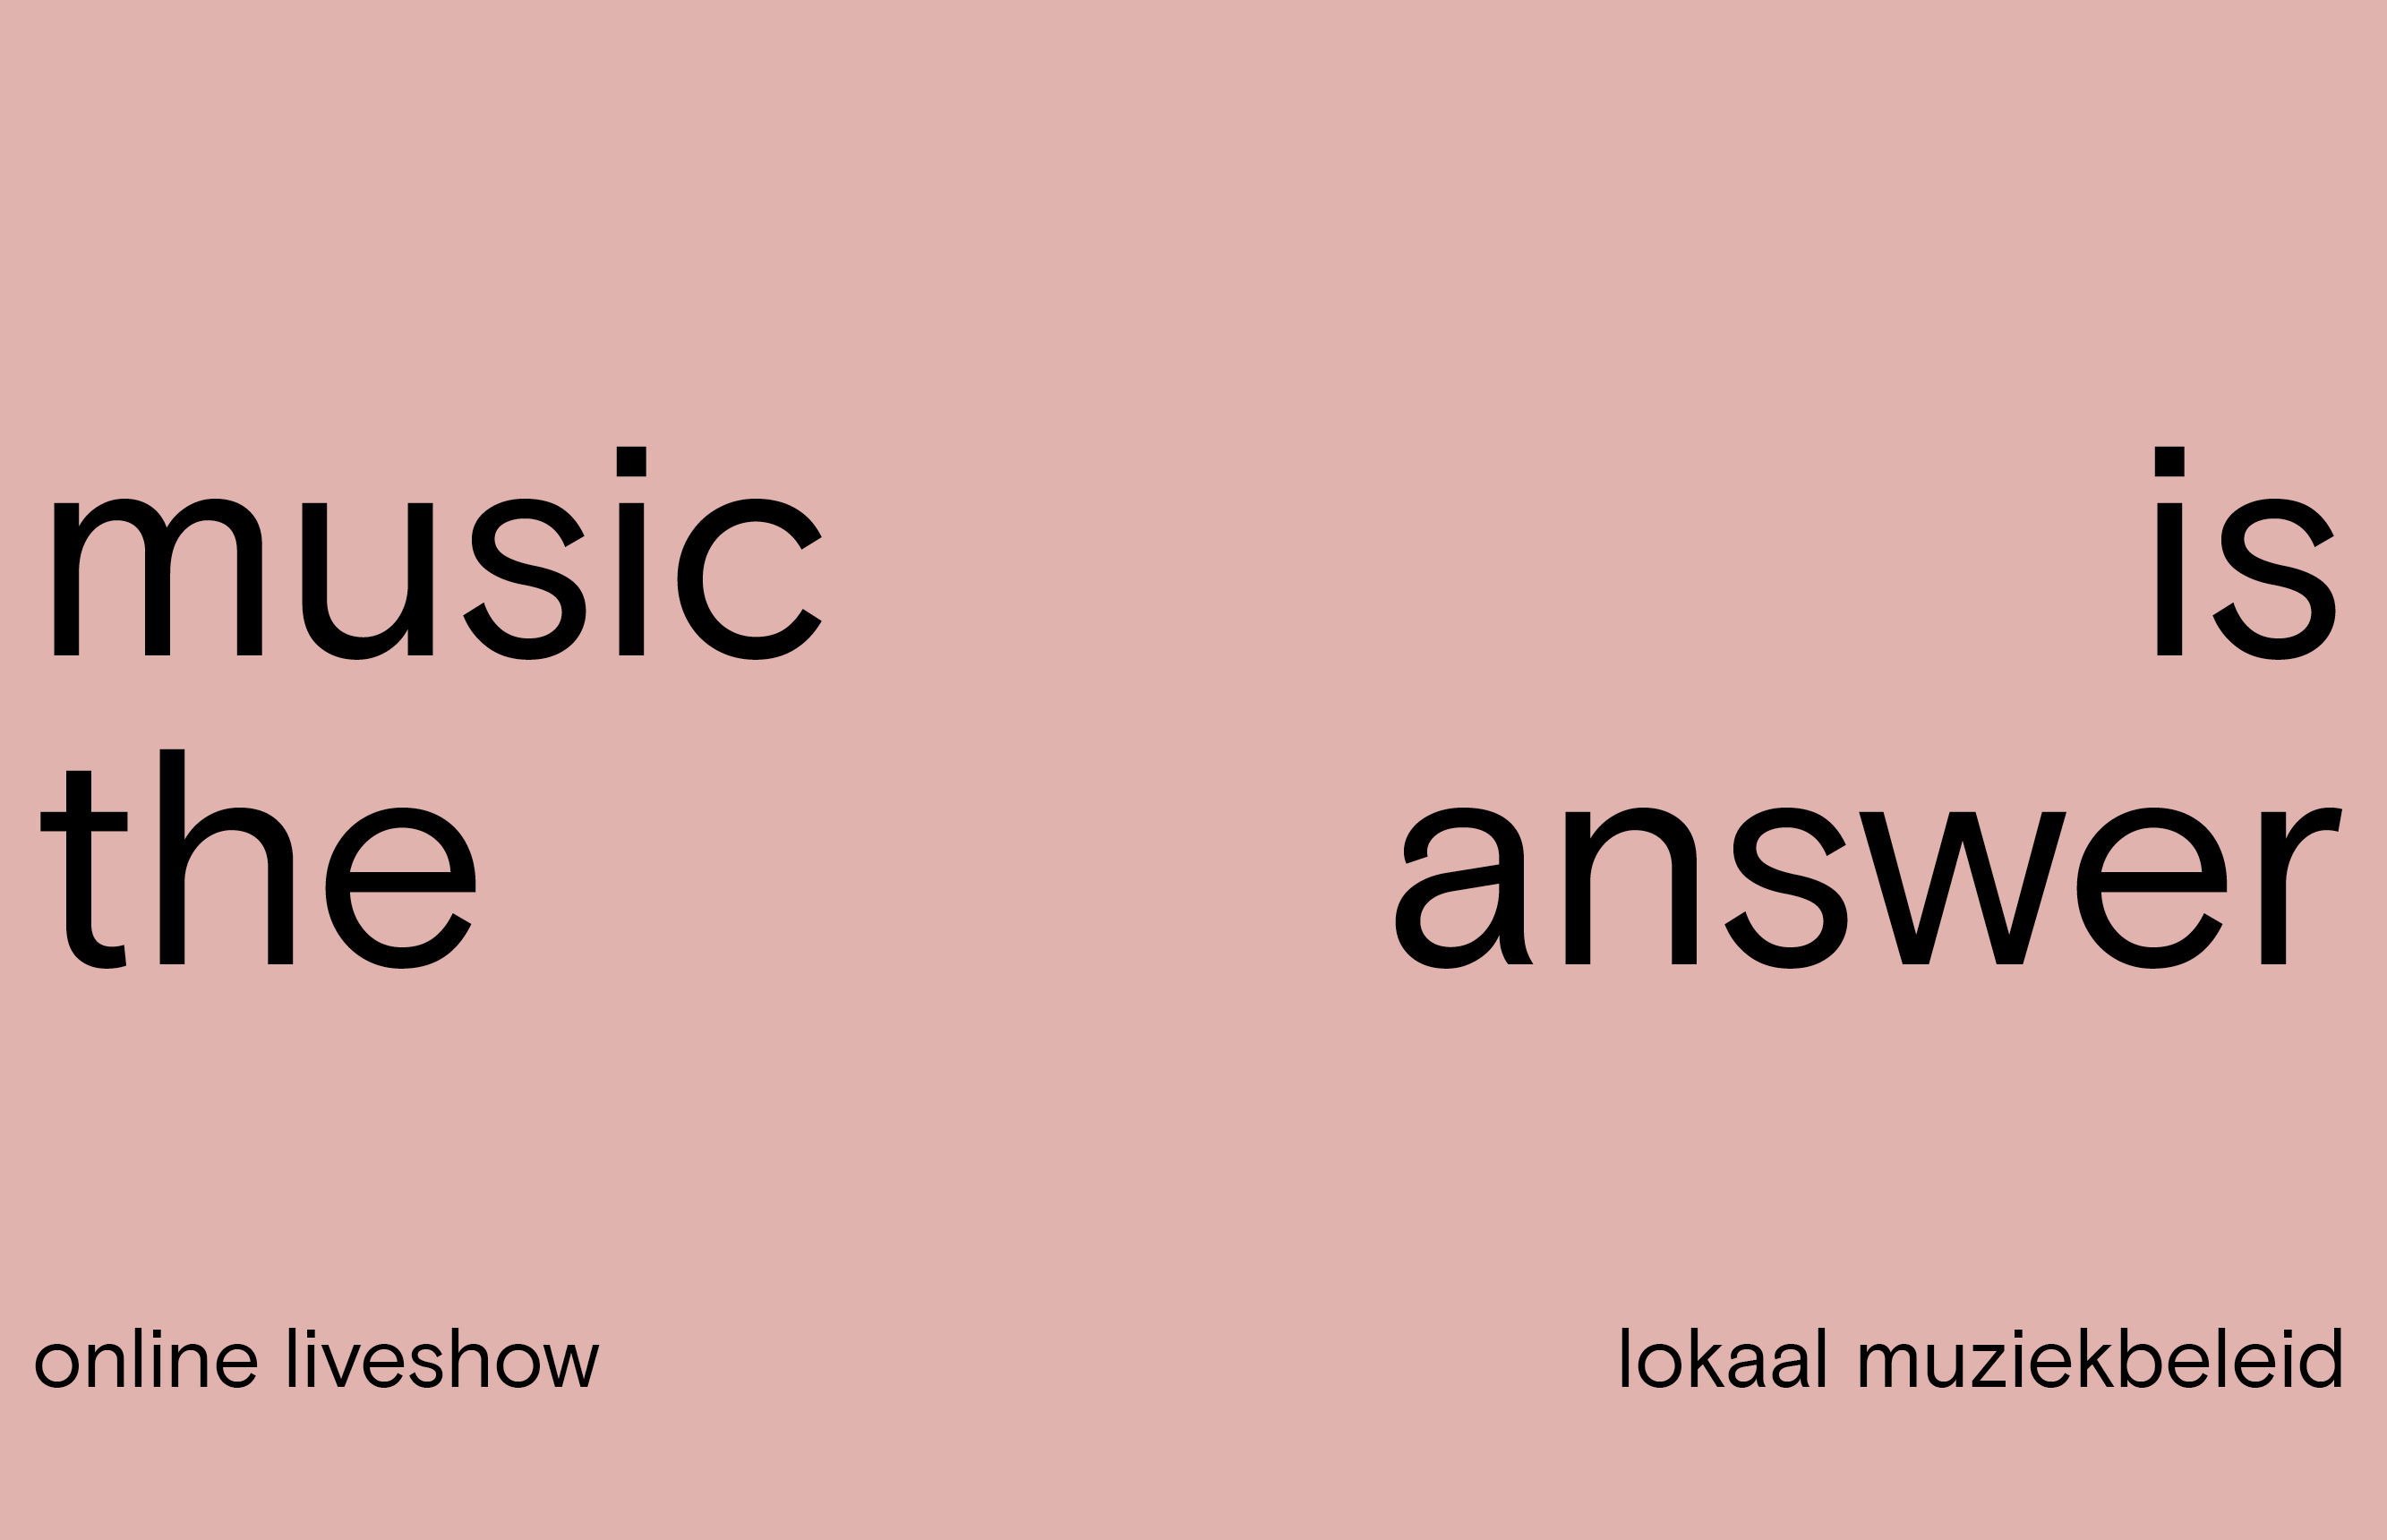 Music Is The Answer — online liveshow lokaal muziekbeleid